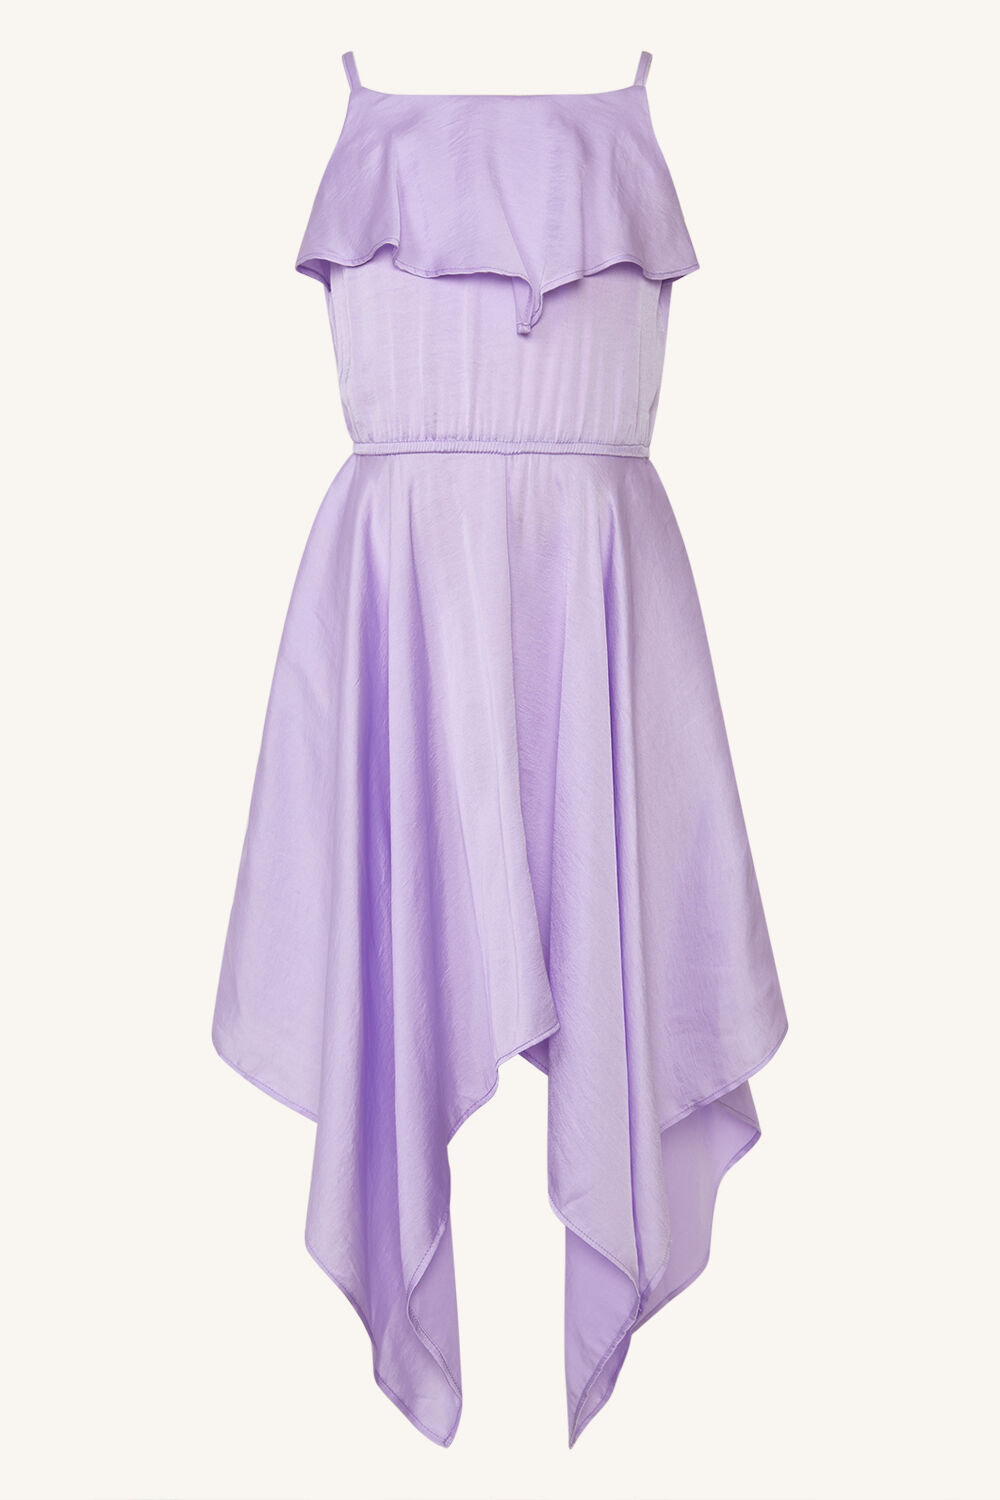 ADDY HANKY DRESS in colour LILAC CHIFFON